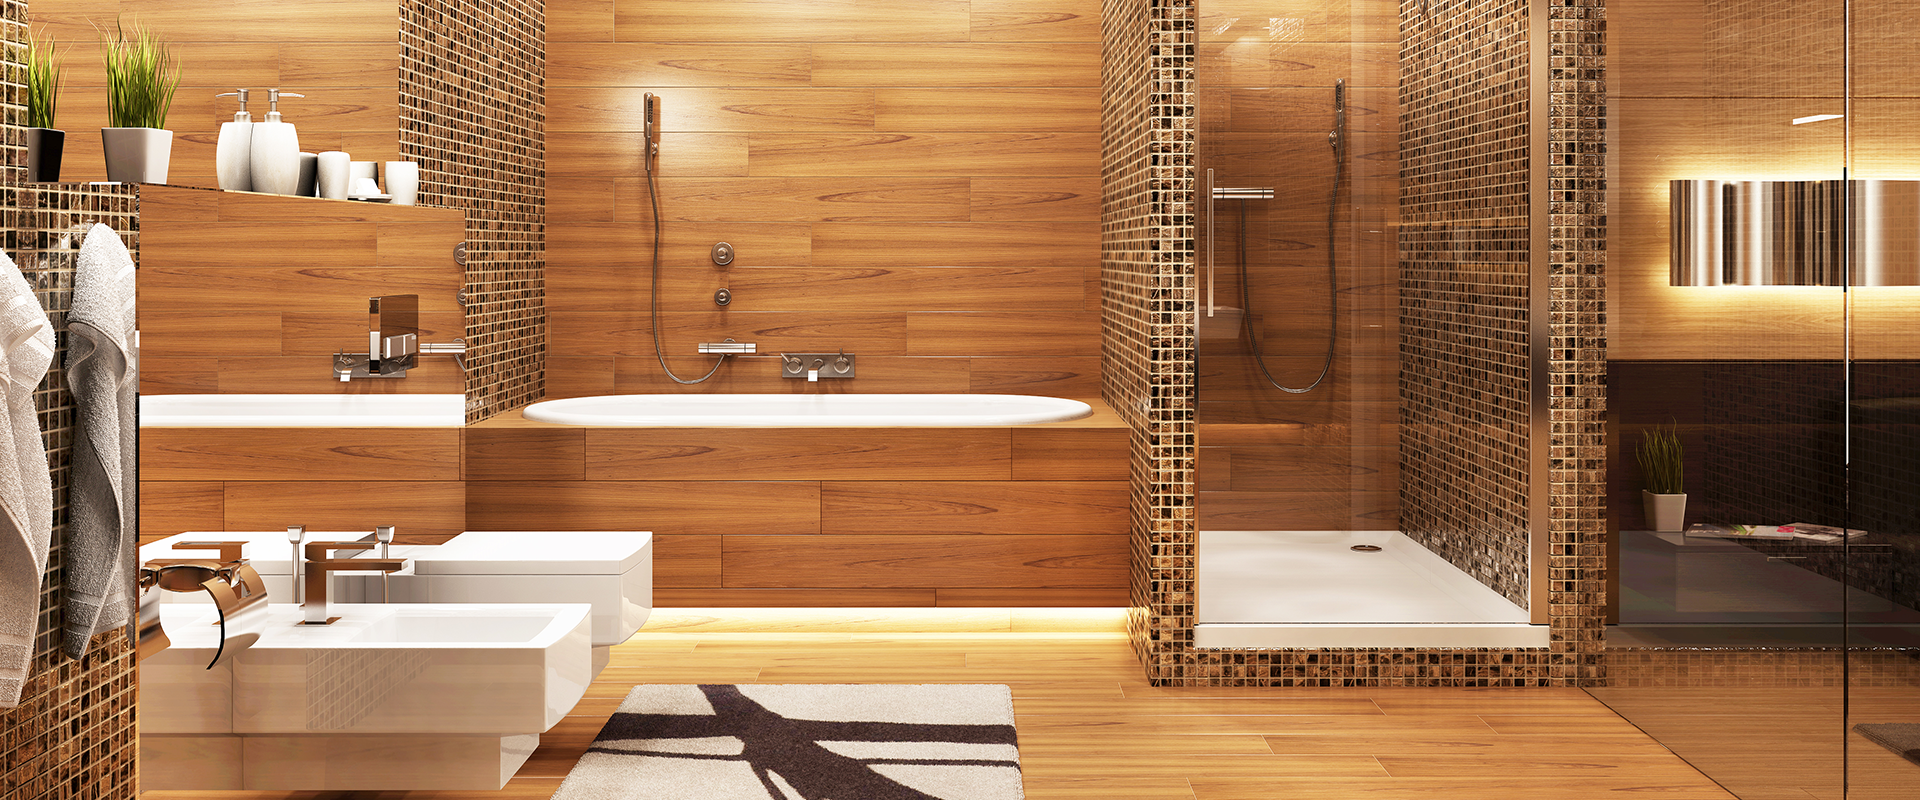 Badezimmer Holz